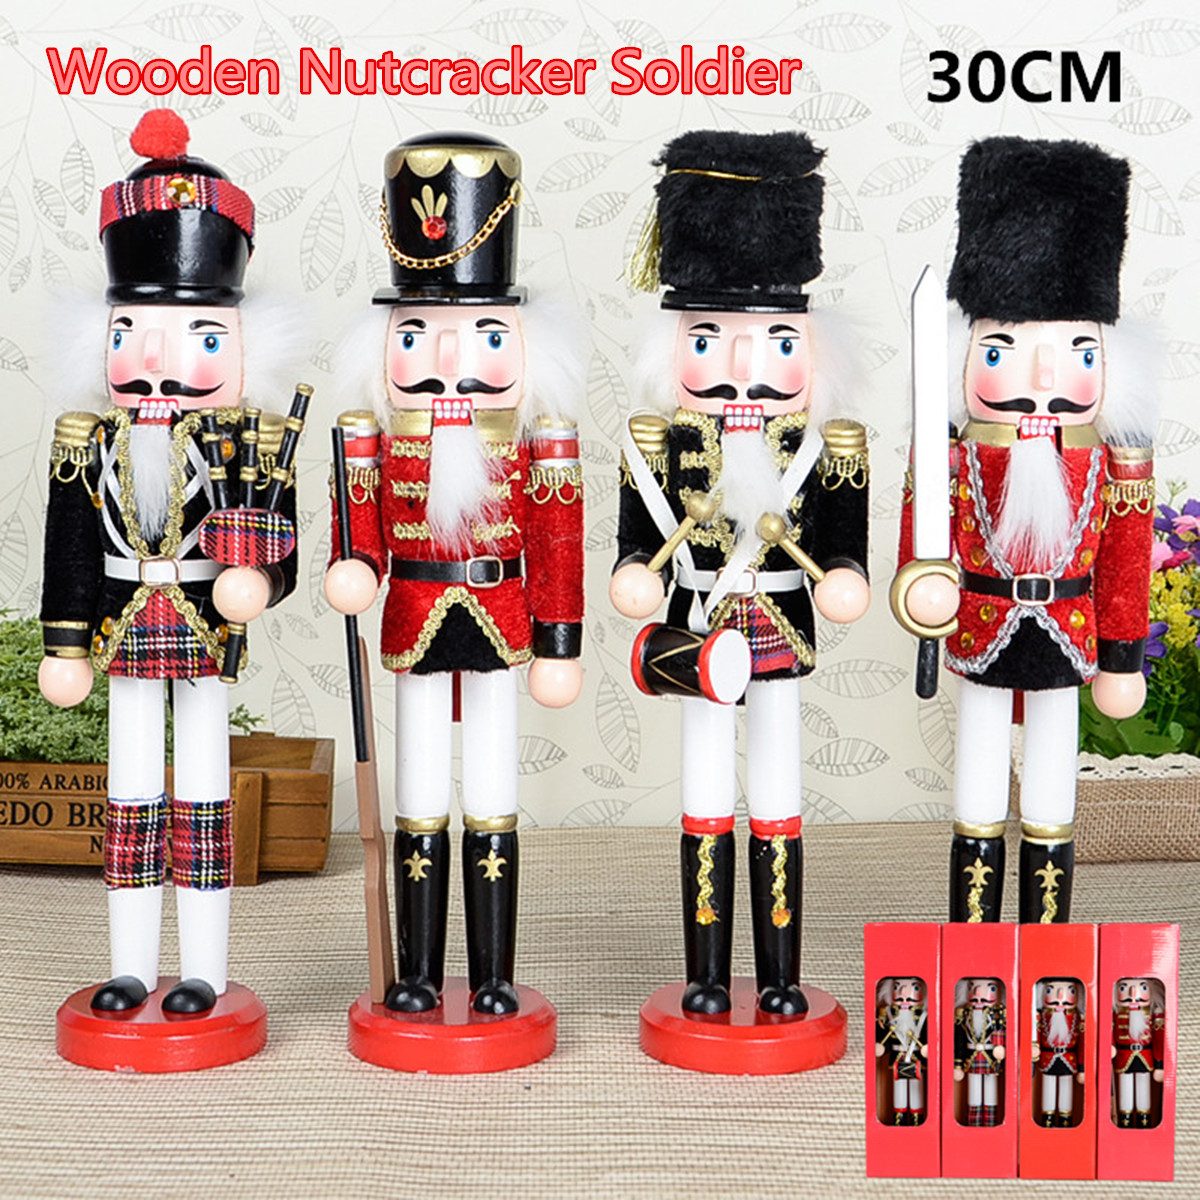 Wooden-Nutcracker-Doll-Soldier-Vintage-Handcraft-Decoration-Christmas-Gifts-1787901-1